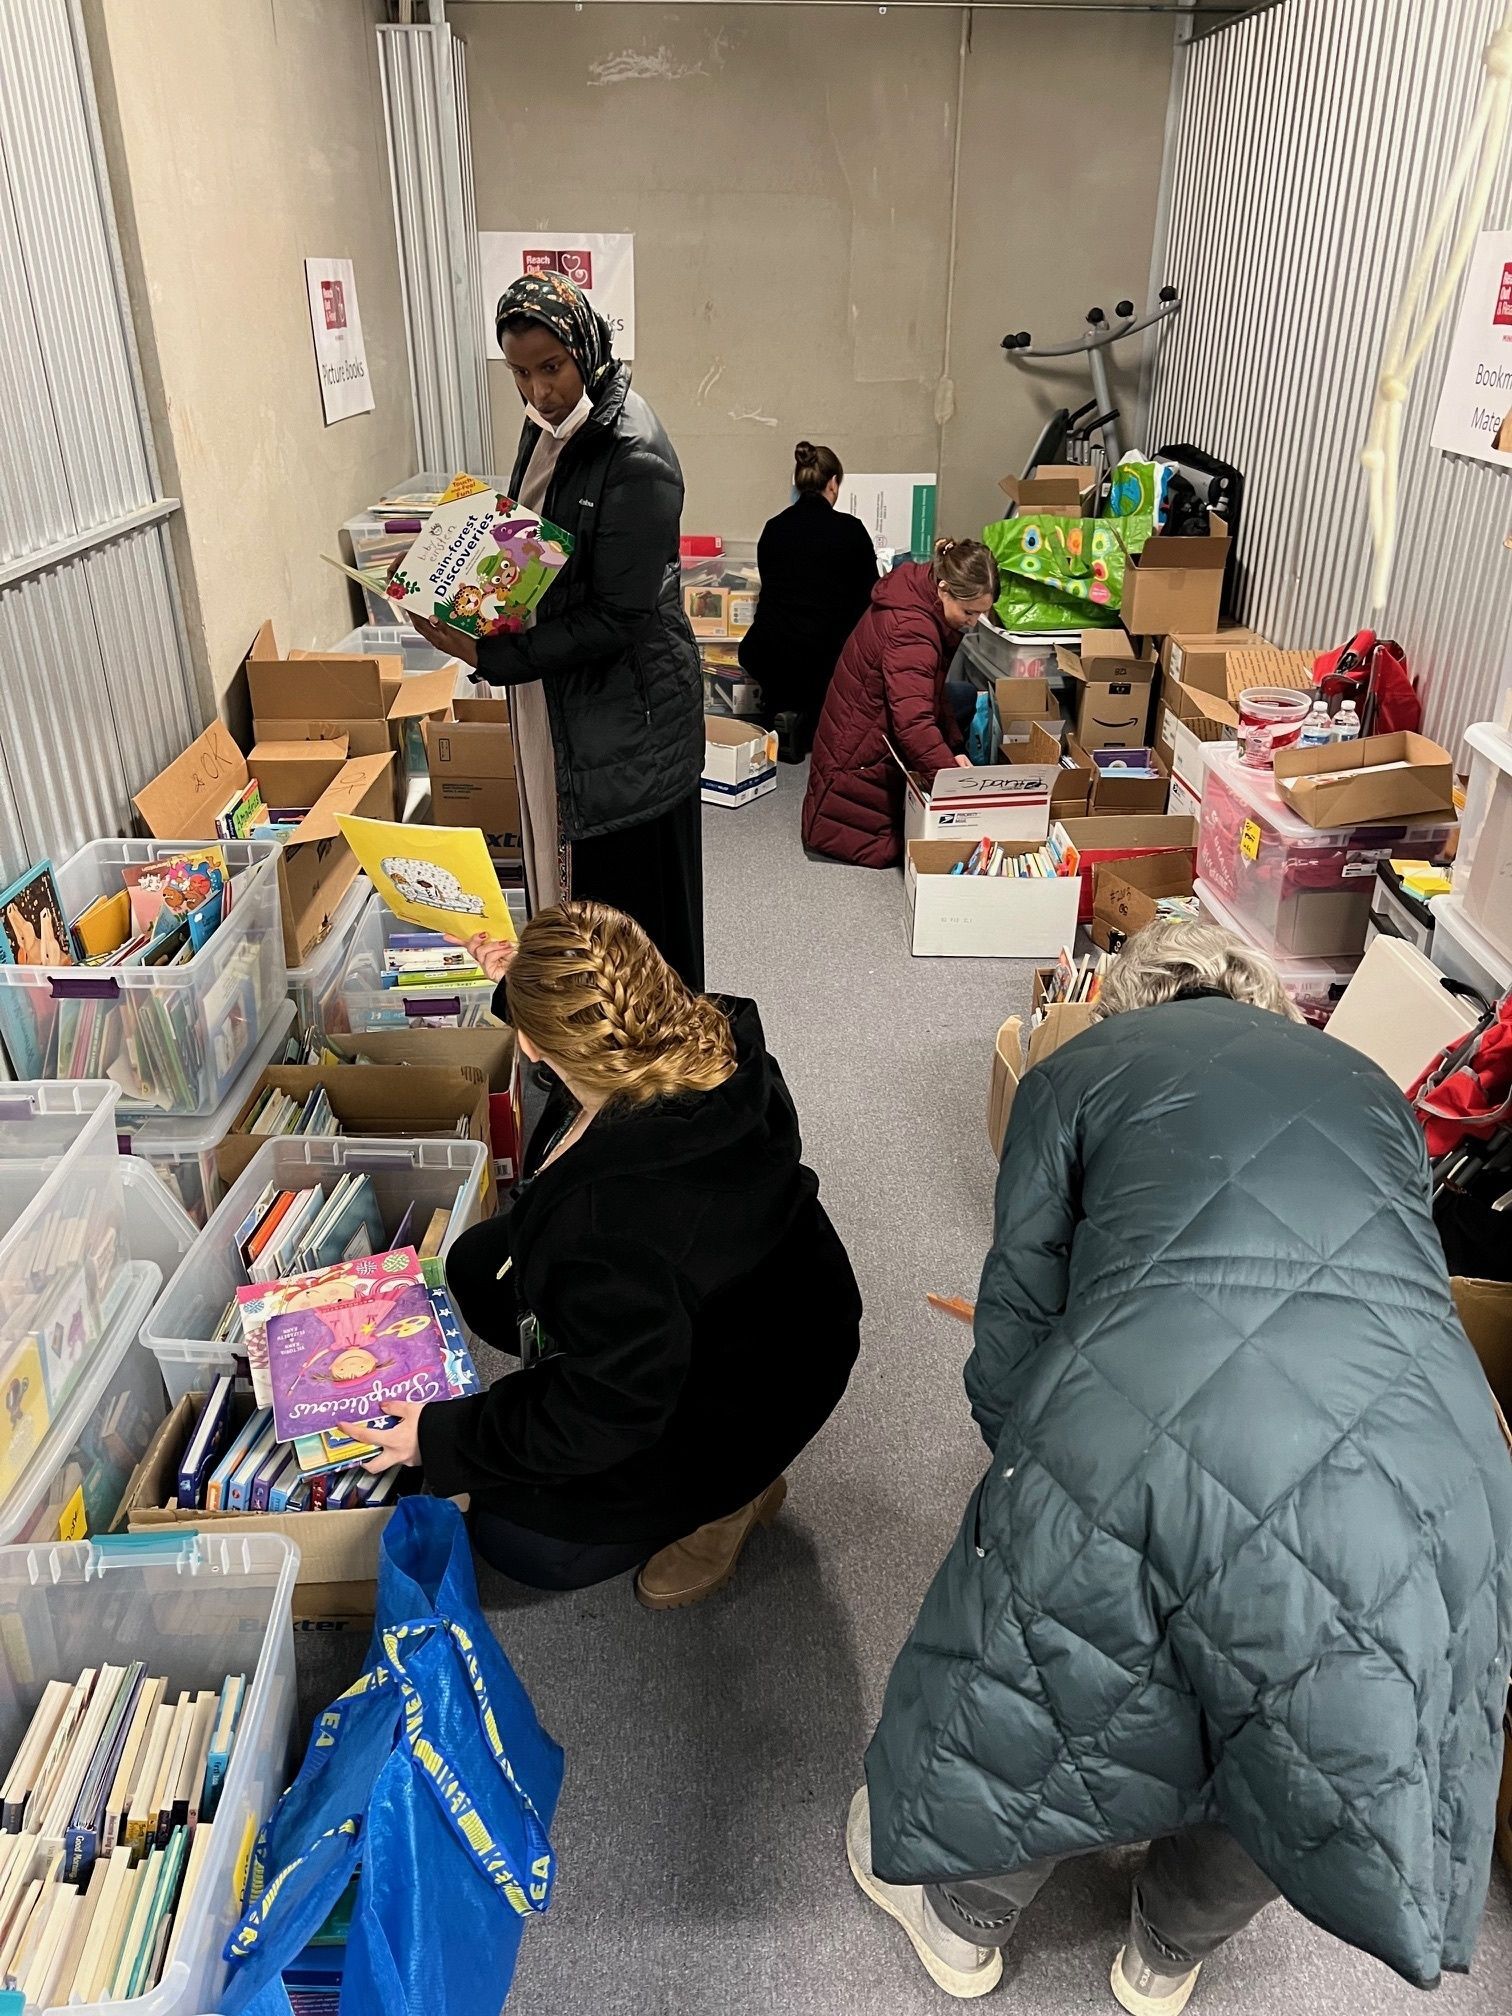 Volunteers/Donors needed for bookshelf project